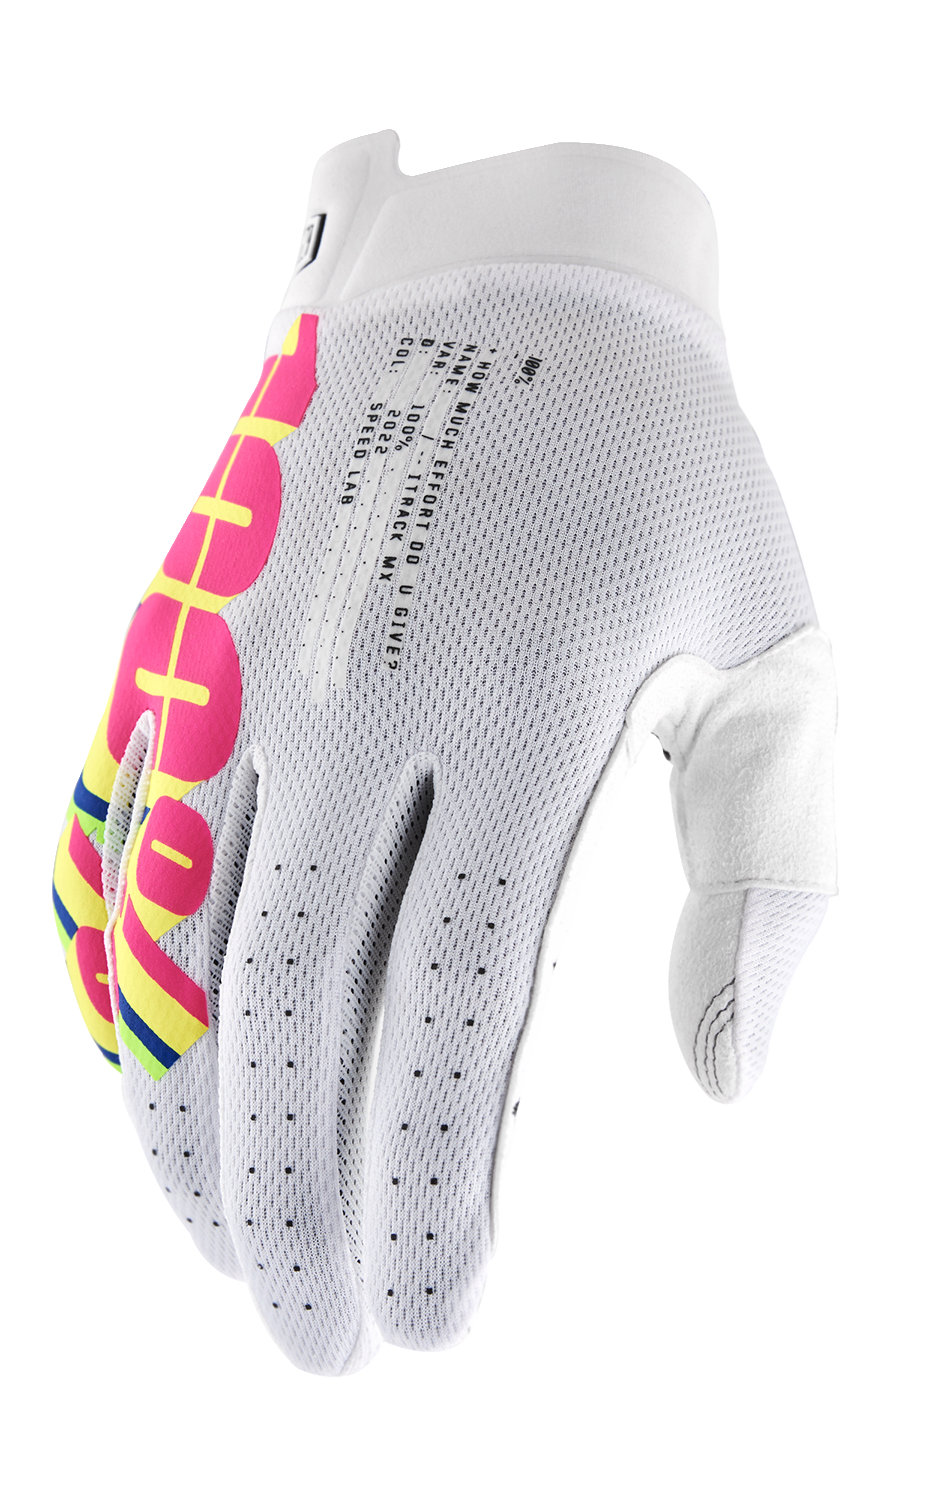 100% iTrack Gloves - System White - Medium 10008-00041